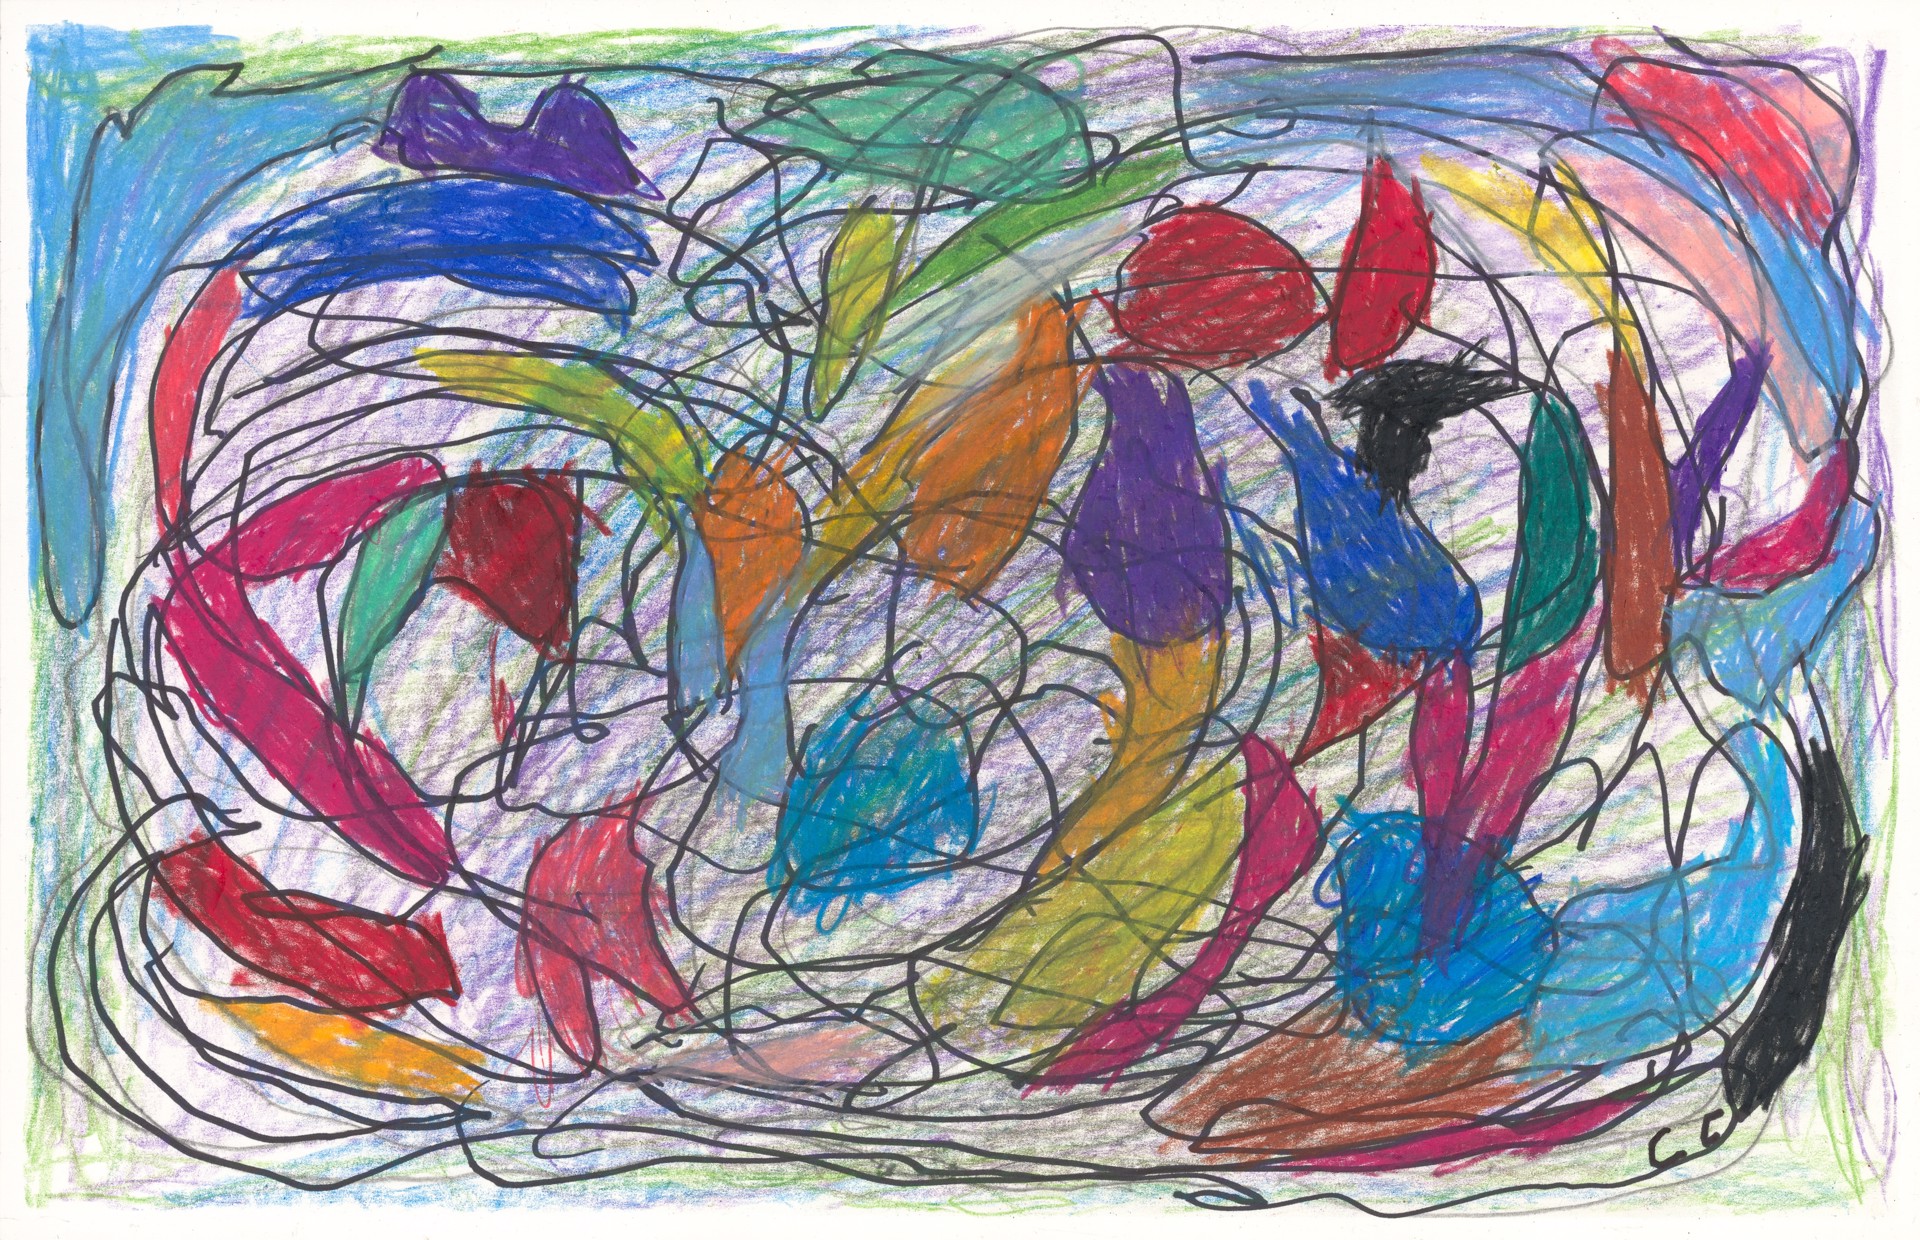 Kites in the Wind by Calvin "Sonny" Clarke